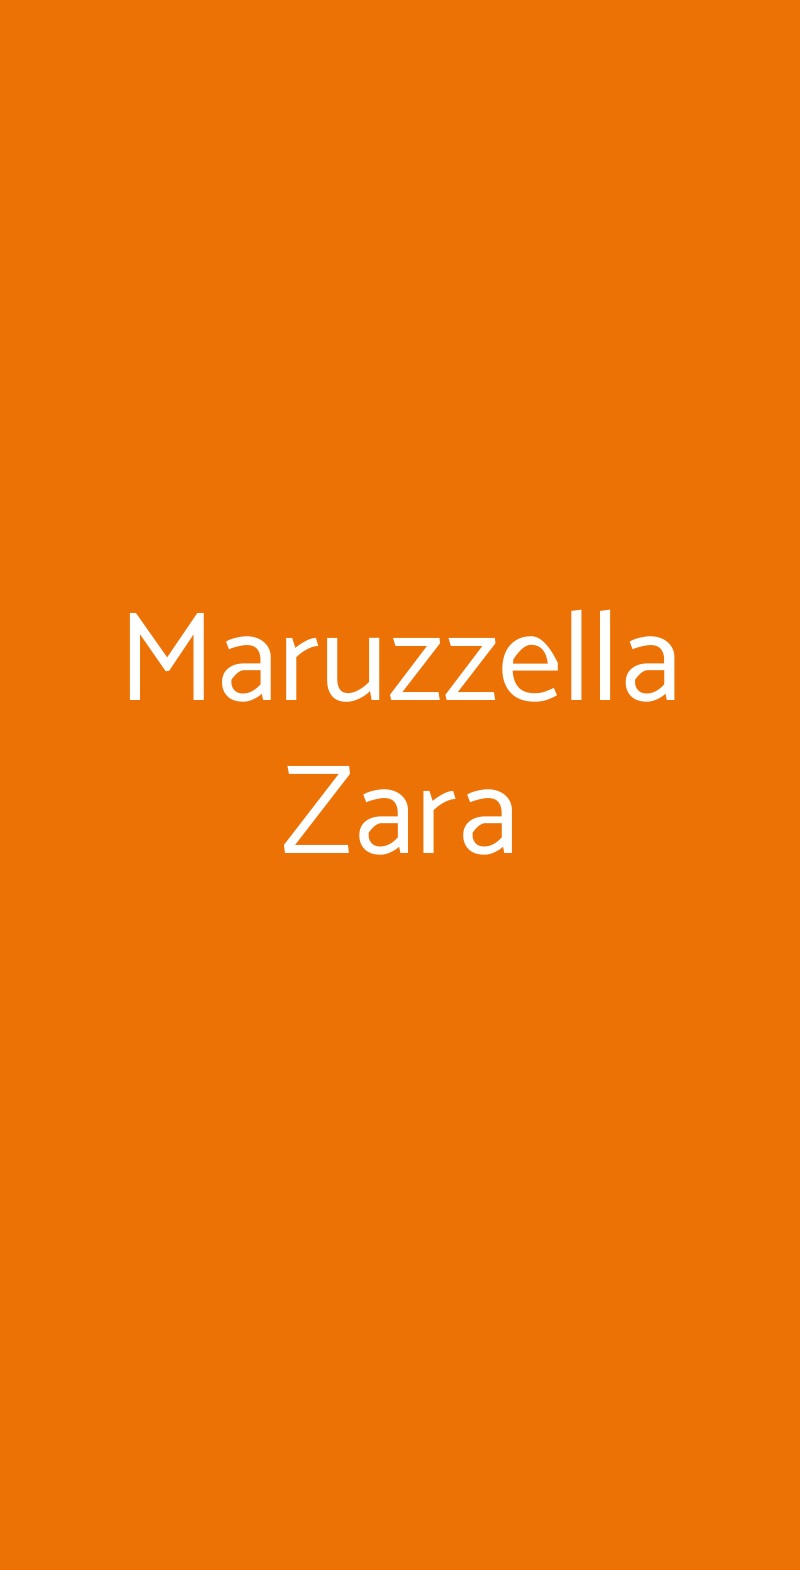 Maruzzella Zara Milano menù 1 pagina